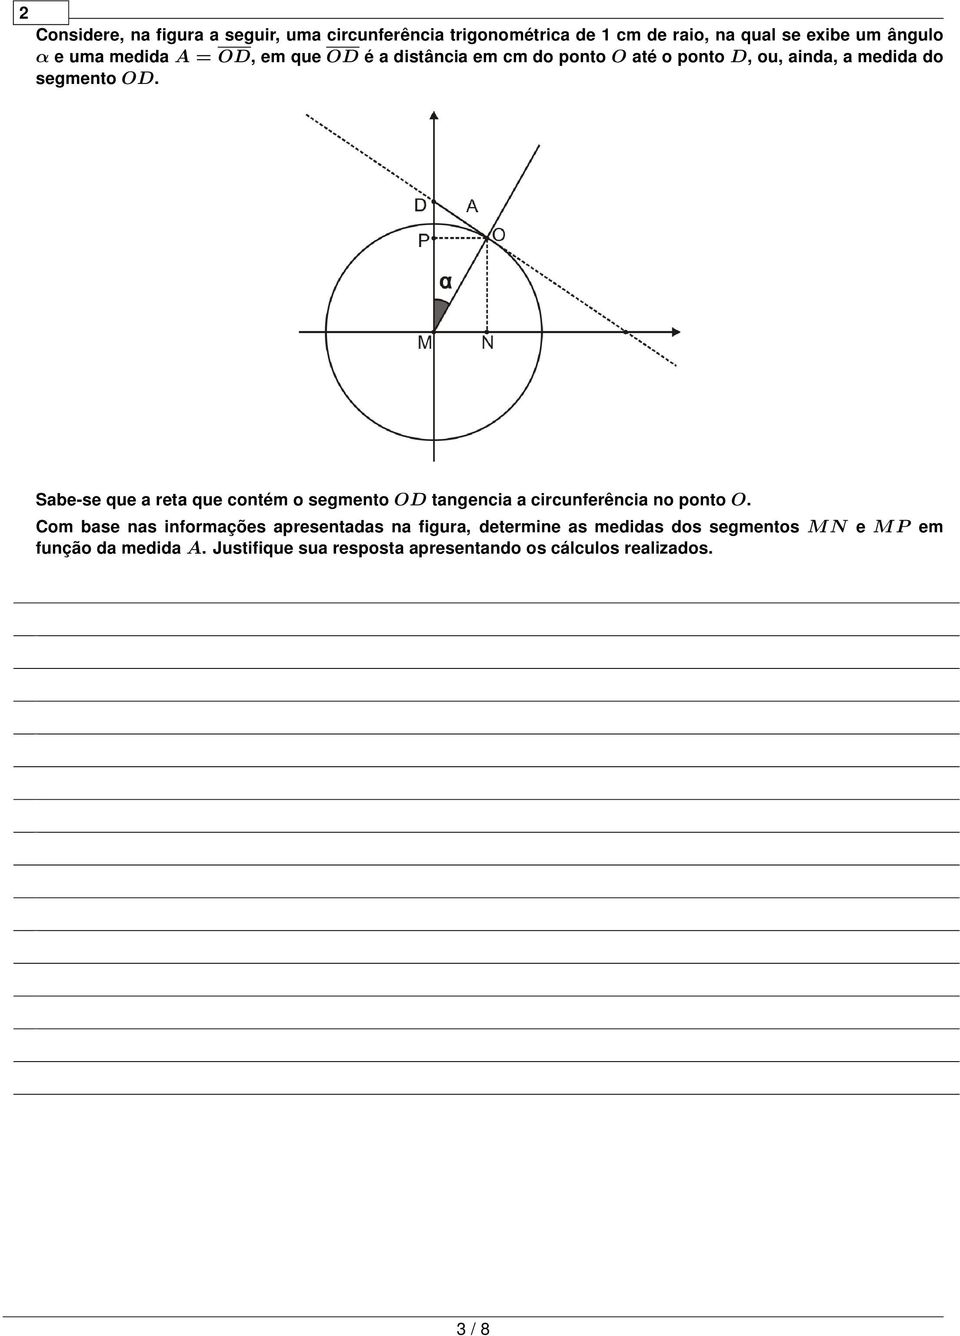 Sabe-se que a reta que contém o segmento OD tangencia a circunferência no ponto O.